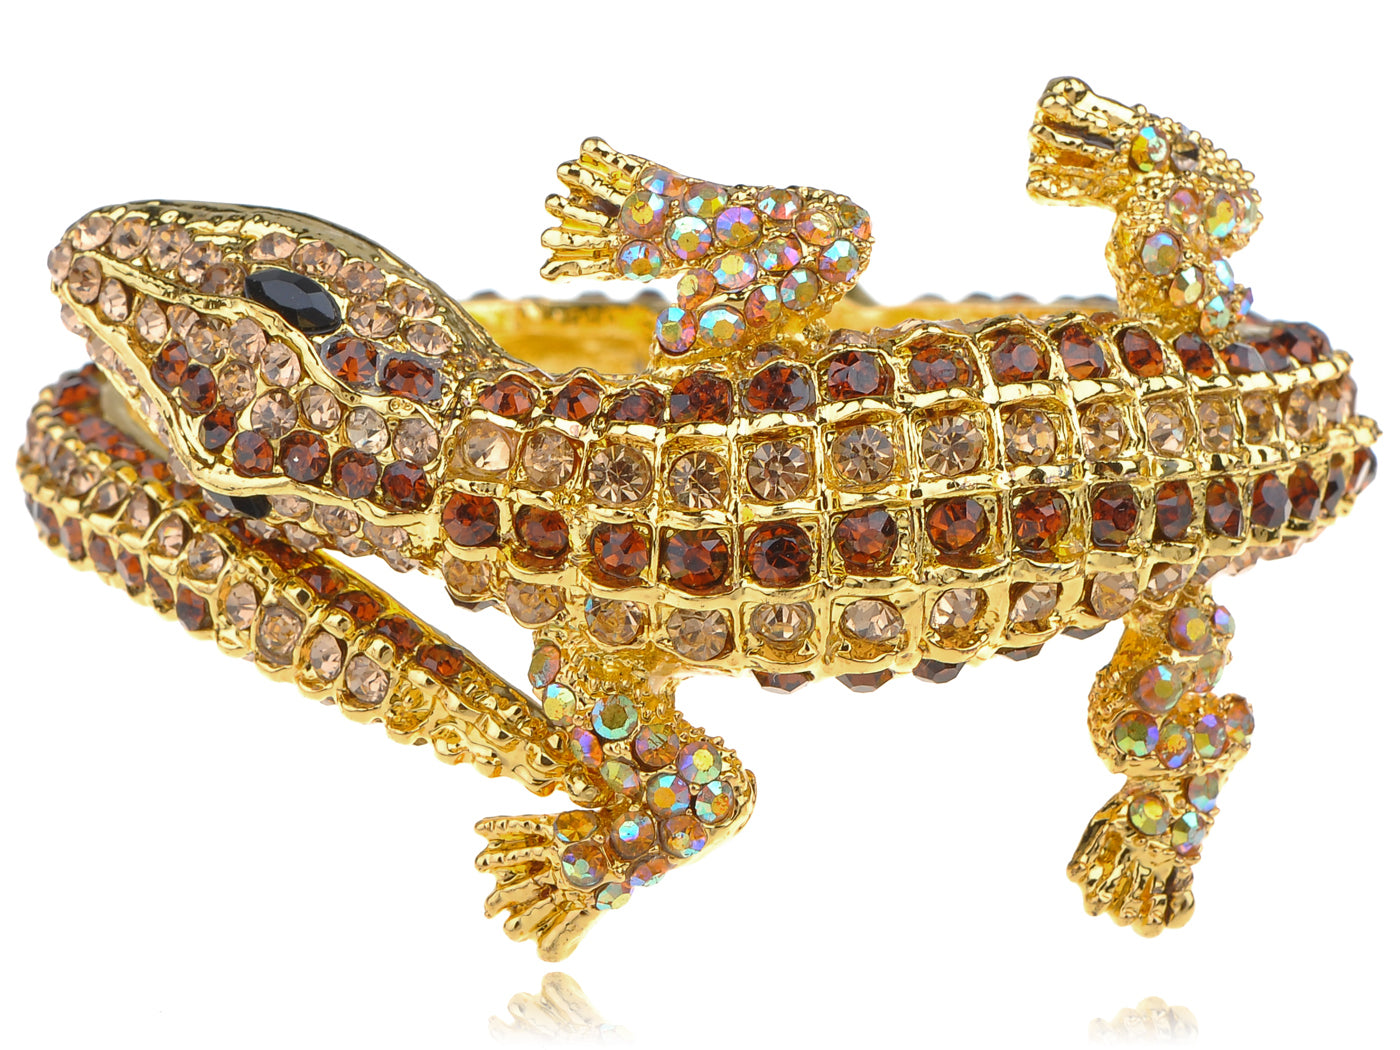 Topaz Colored Crocodile Alligator Bangle Bracelet